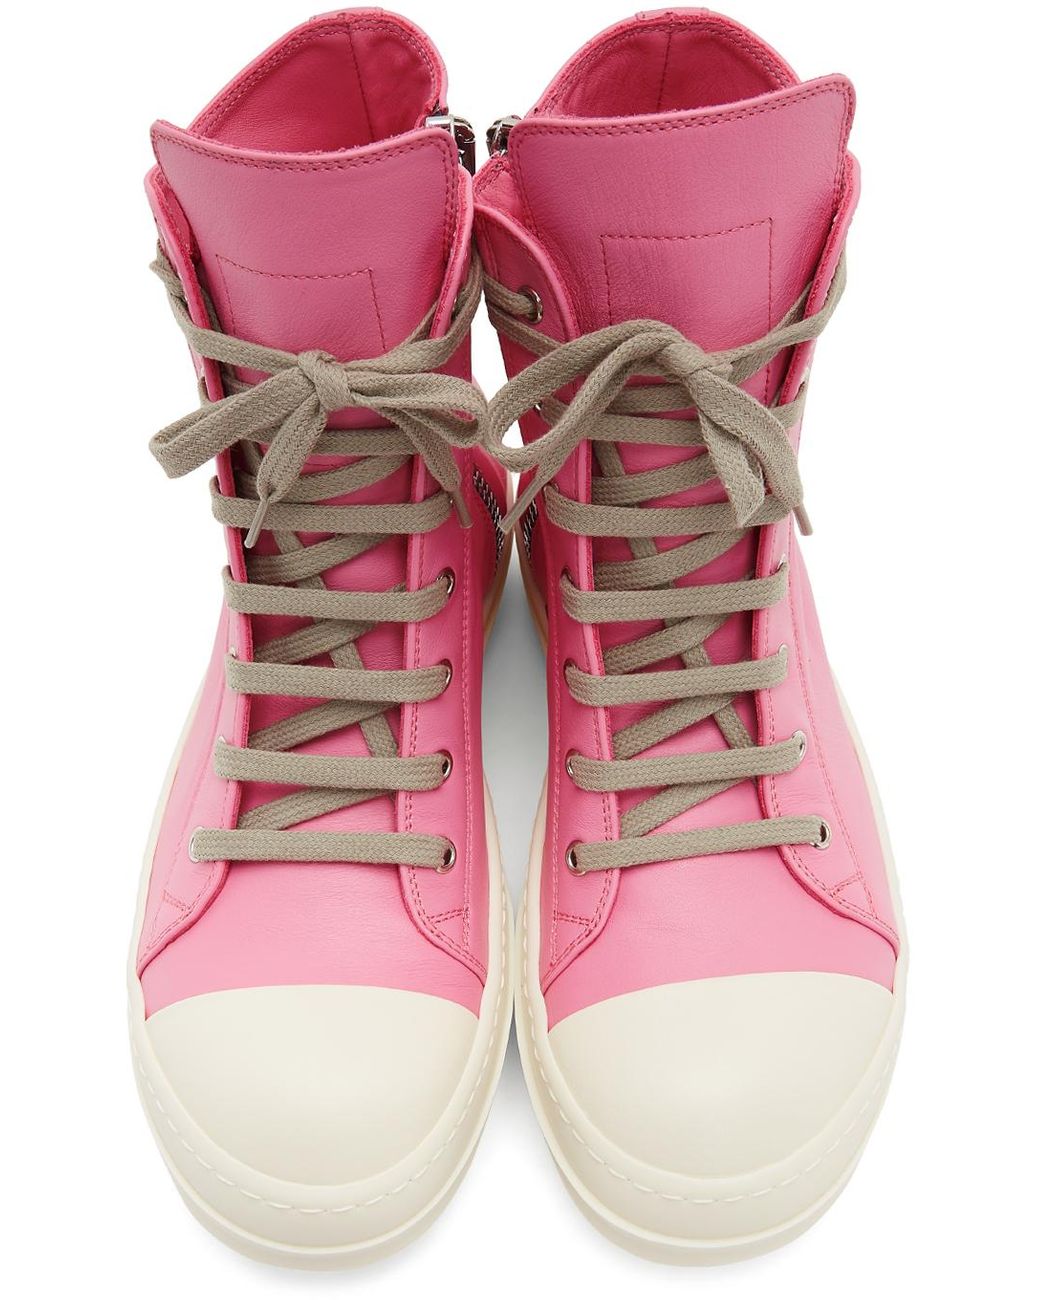 Rick Owens Pink Calfskin High Sneakers for Men